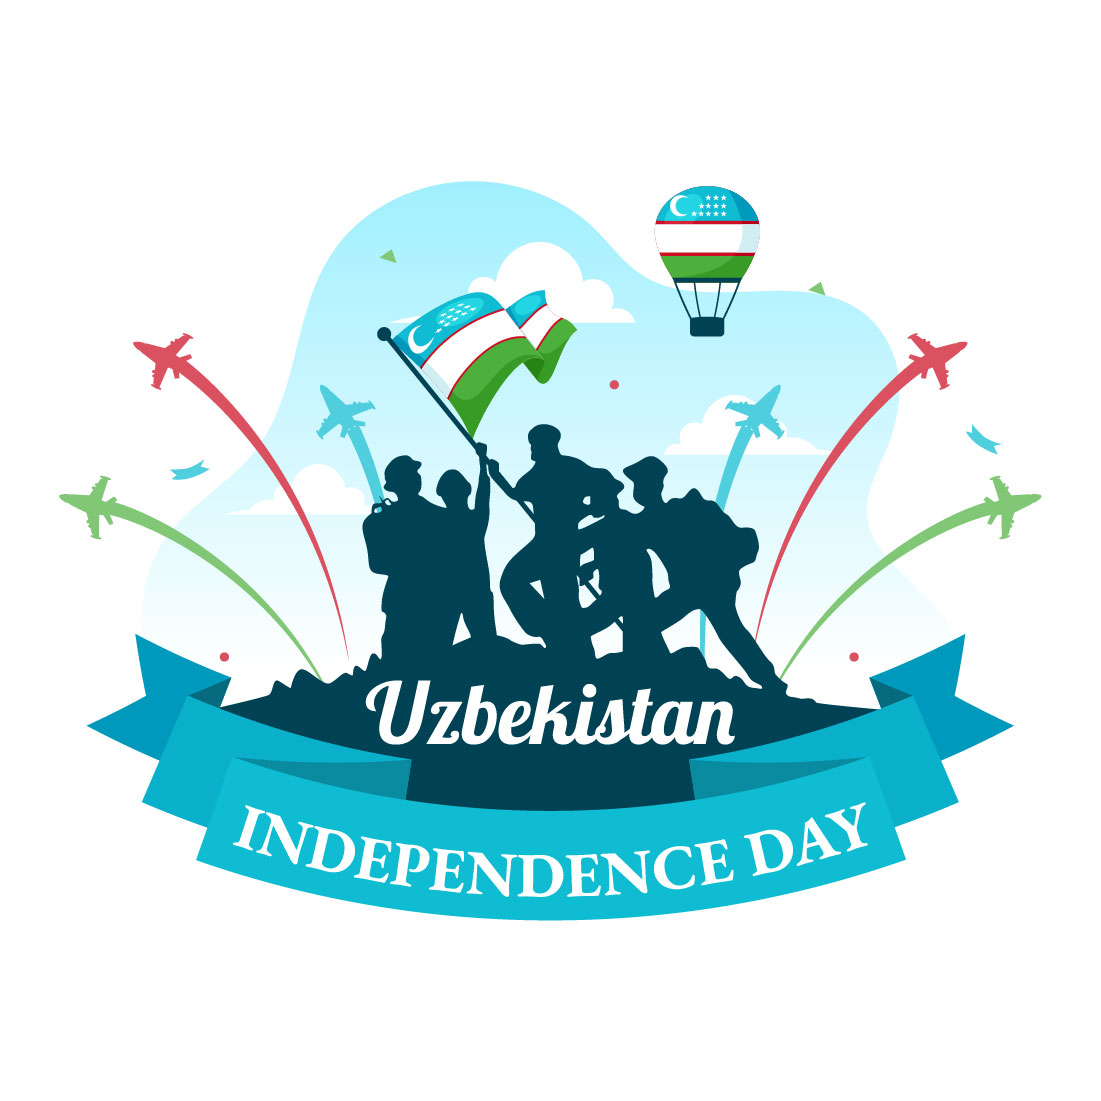 13 Uzbekistan Independence Day Illustration preview image.